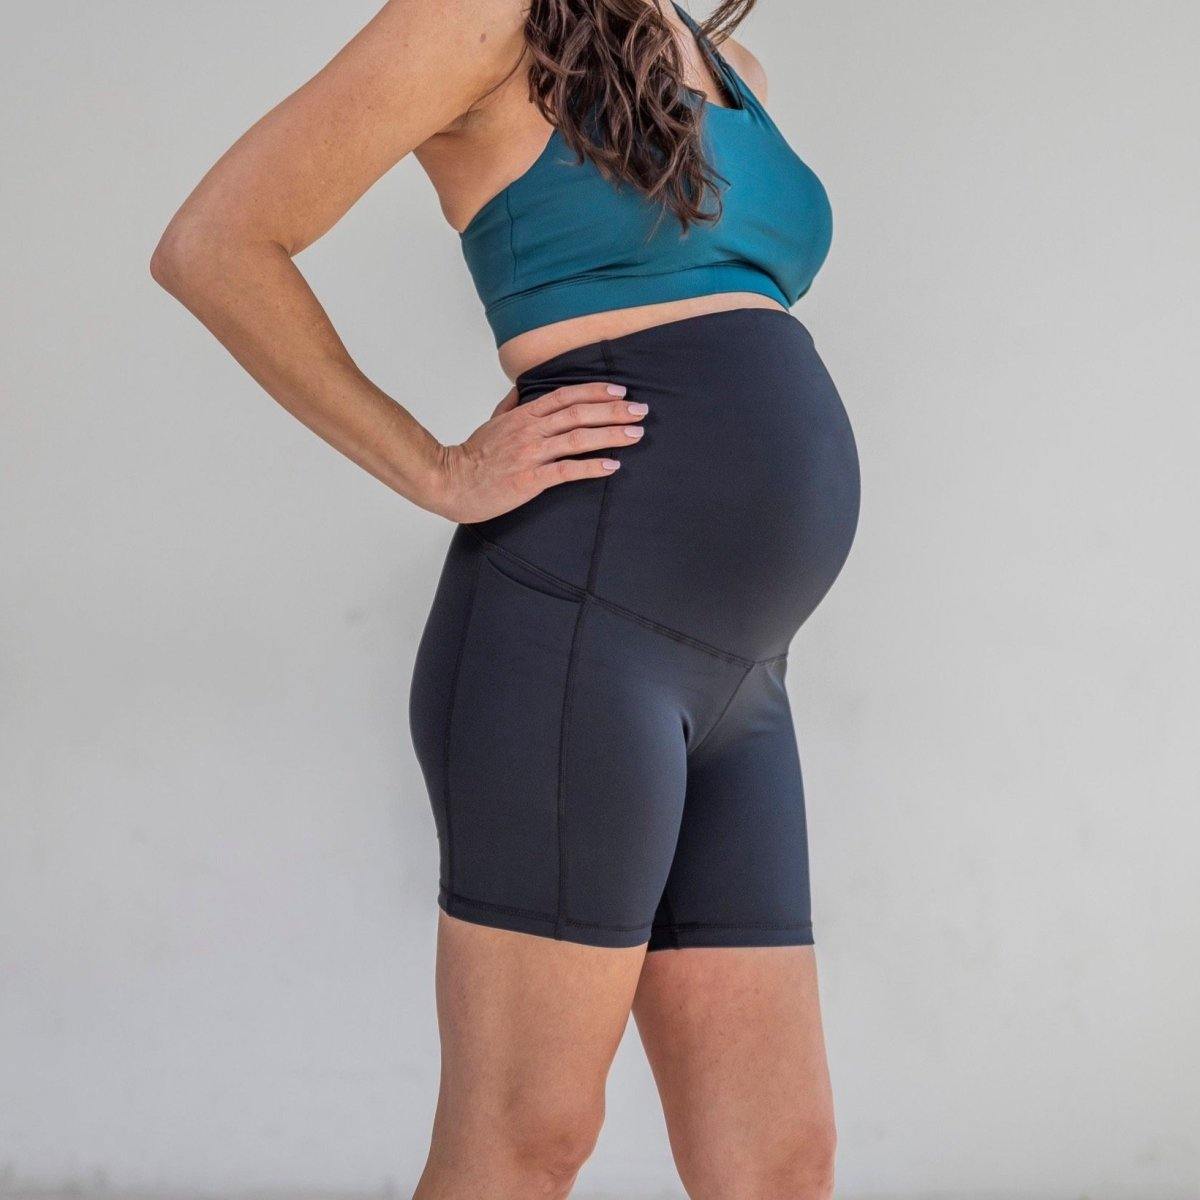 Maternity Rio Shorts (5 in. inseam) - Black - Senita Athletics